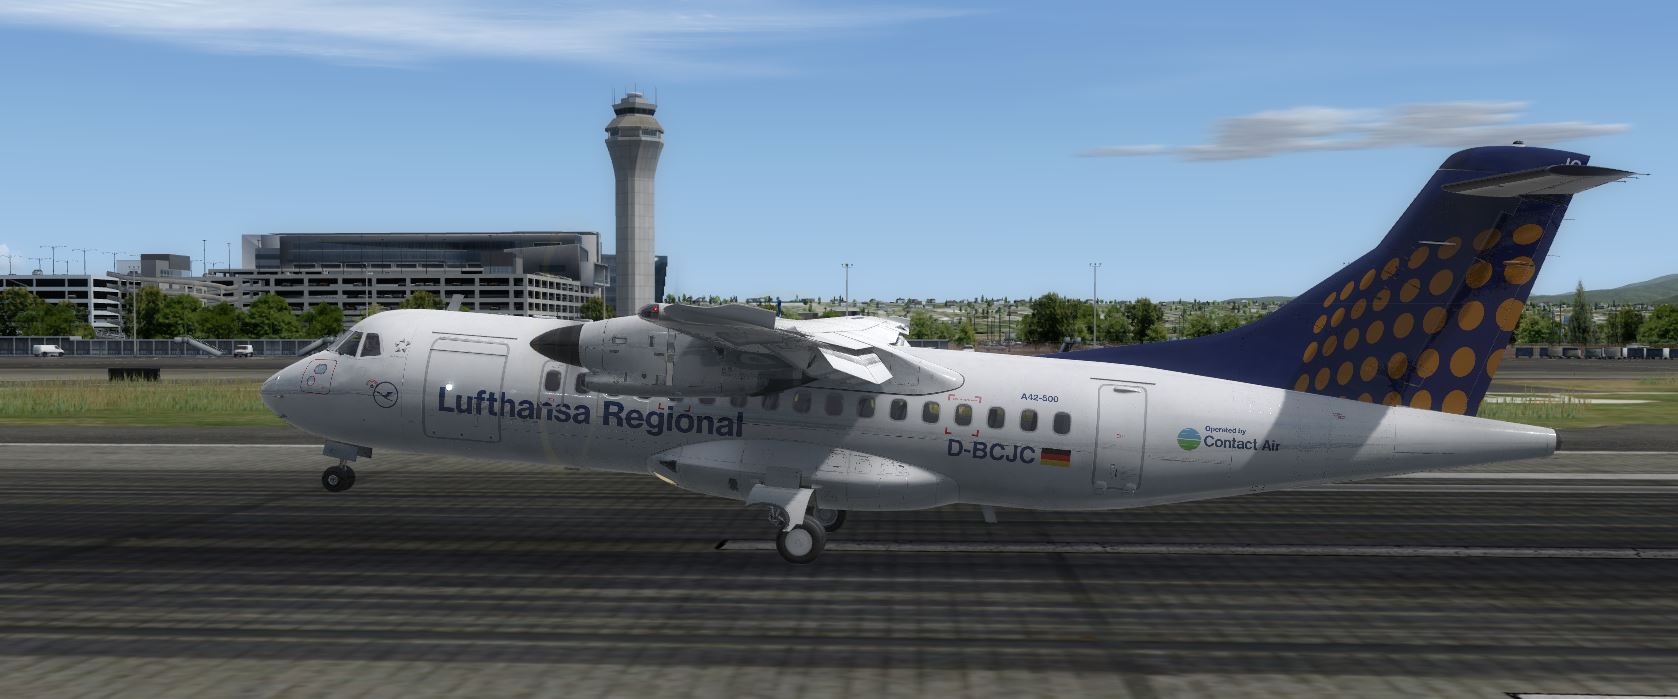 ATR42-500 Lufthansa-8592 